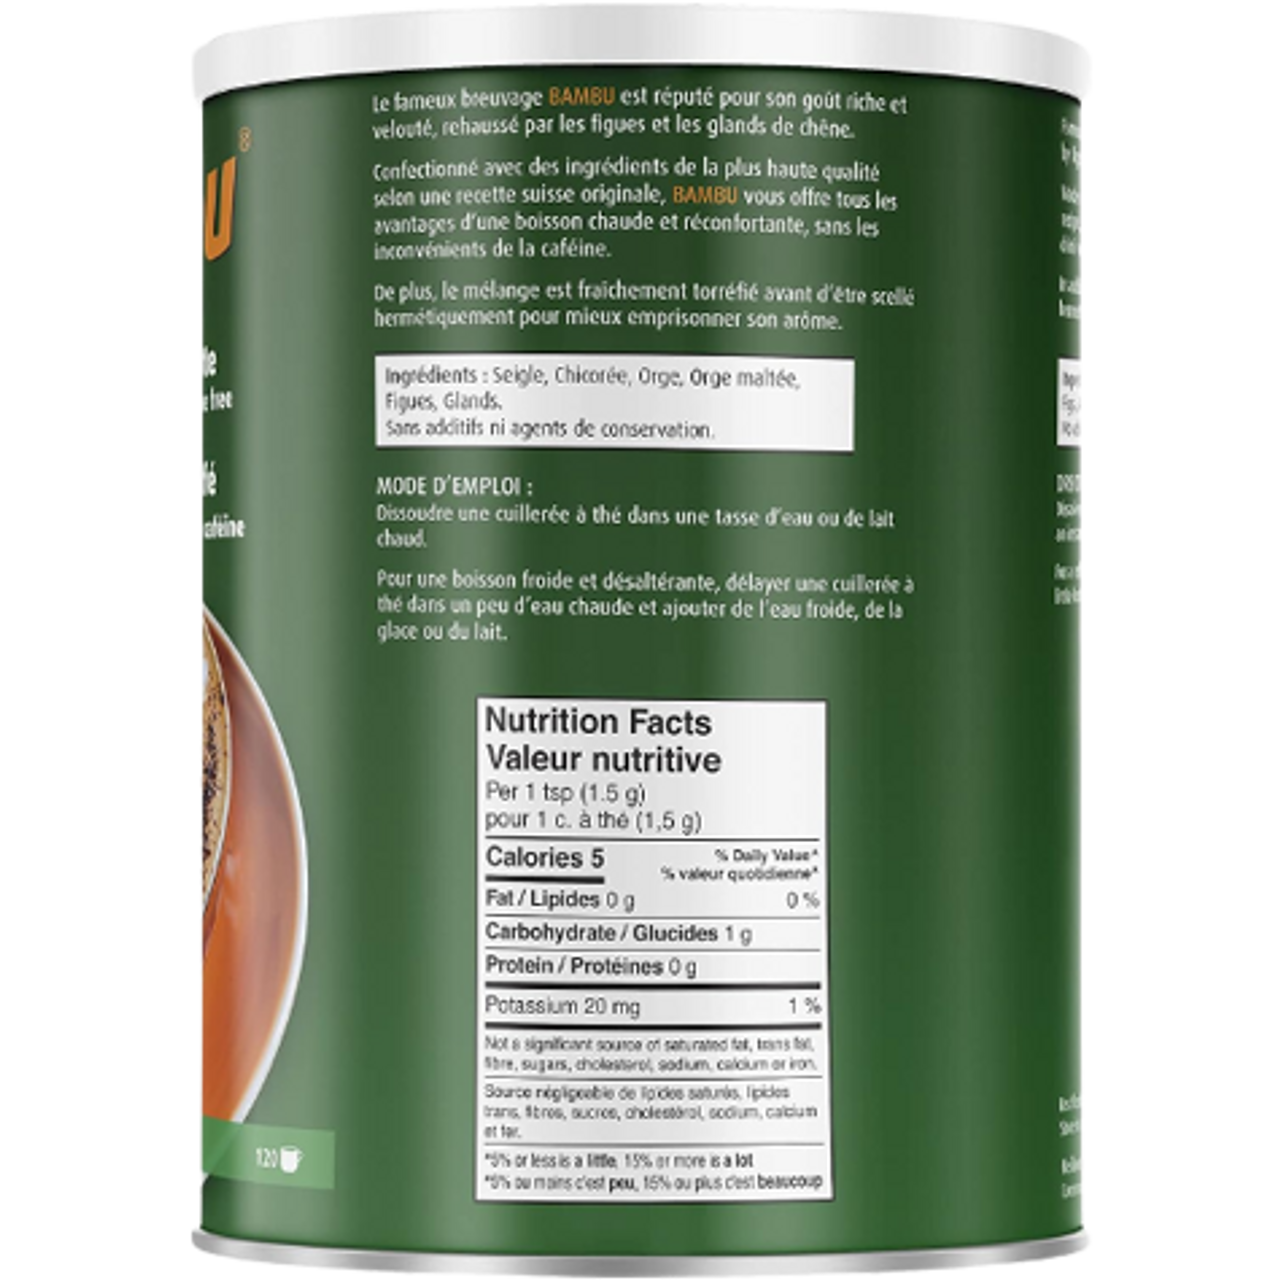 Herbamare Sodium-free - Organic Herbed Salt Substitute 125 G - A.Vogel  Canada